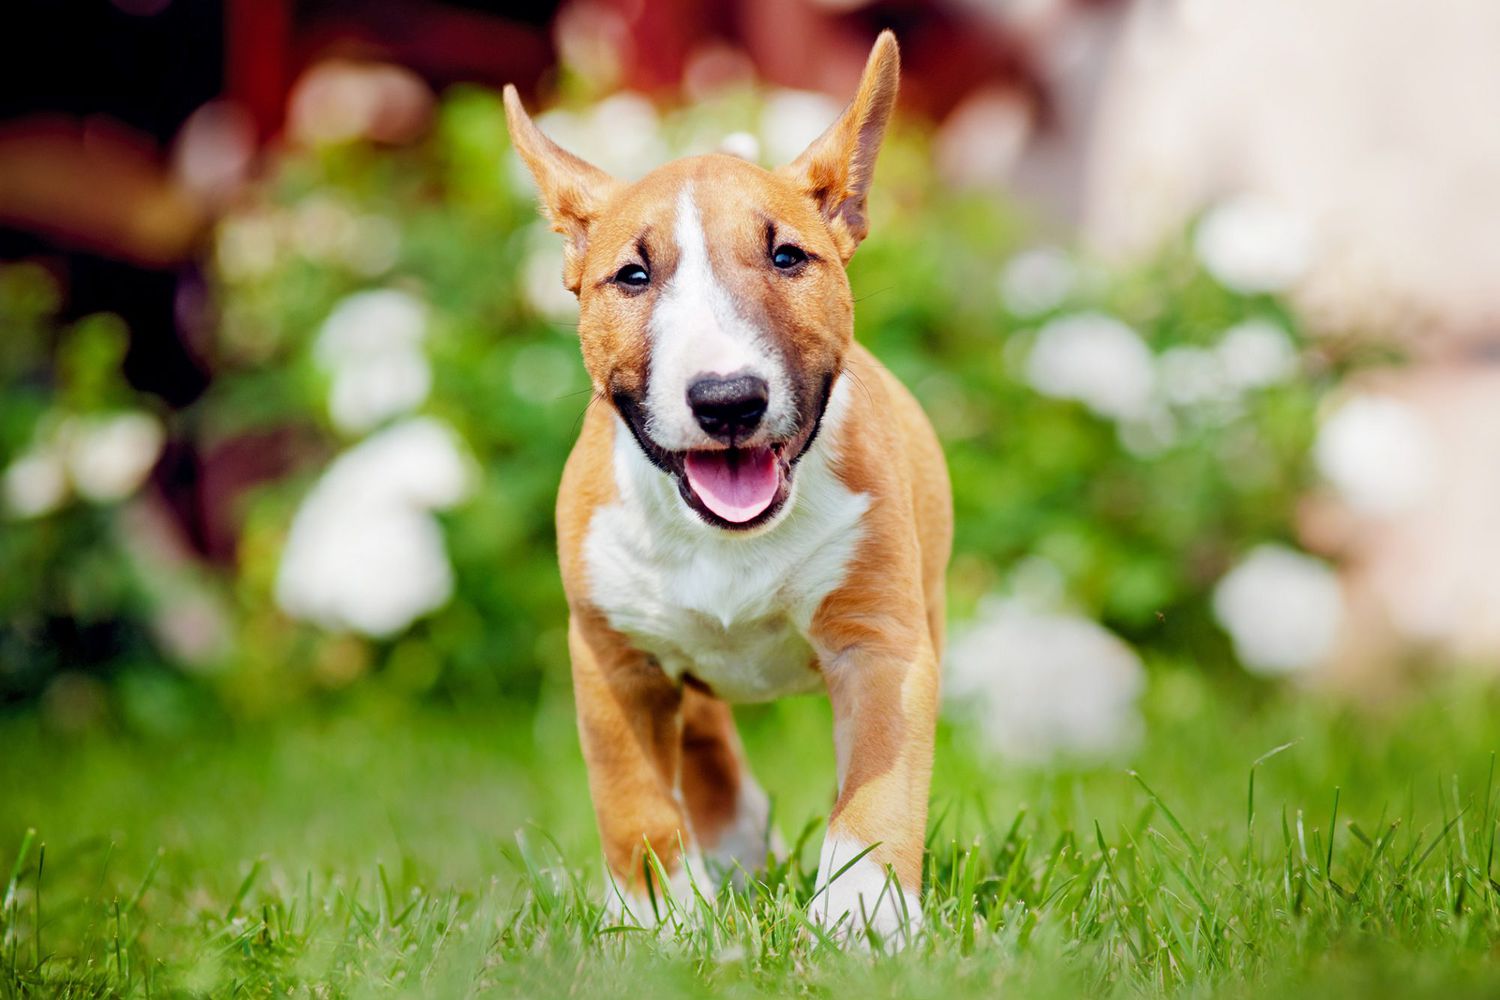 bull terrier puppy running in grass